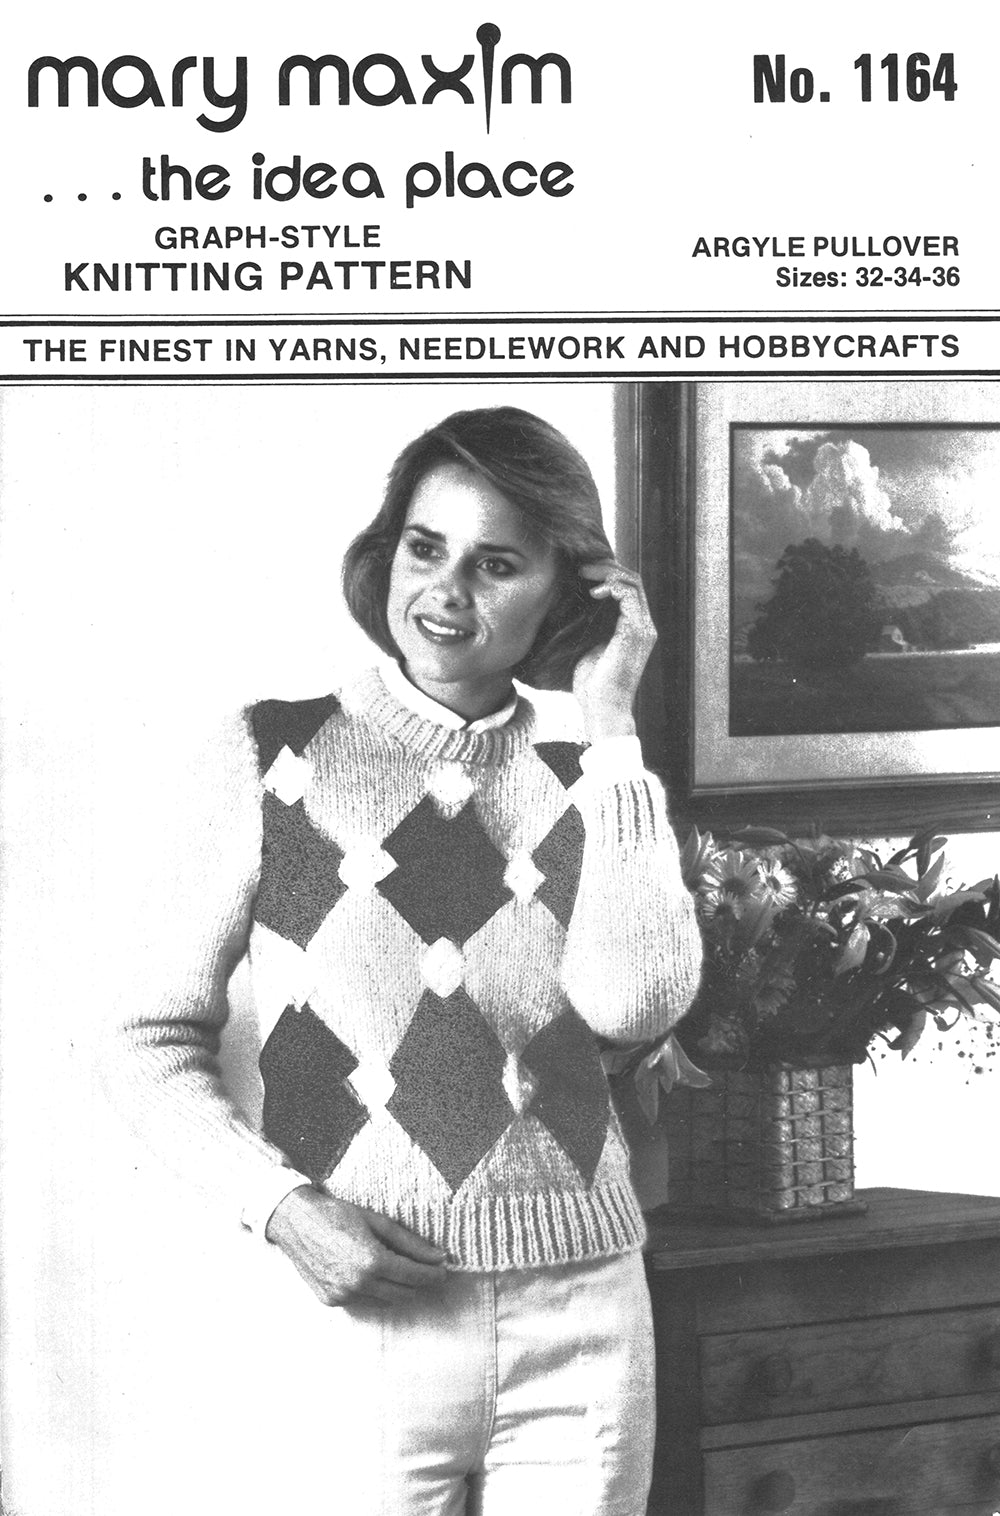 Argyle Pullover Pattern